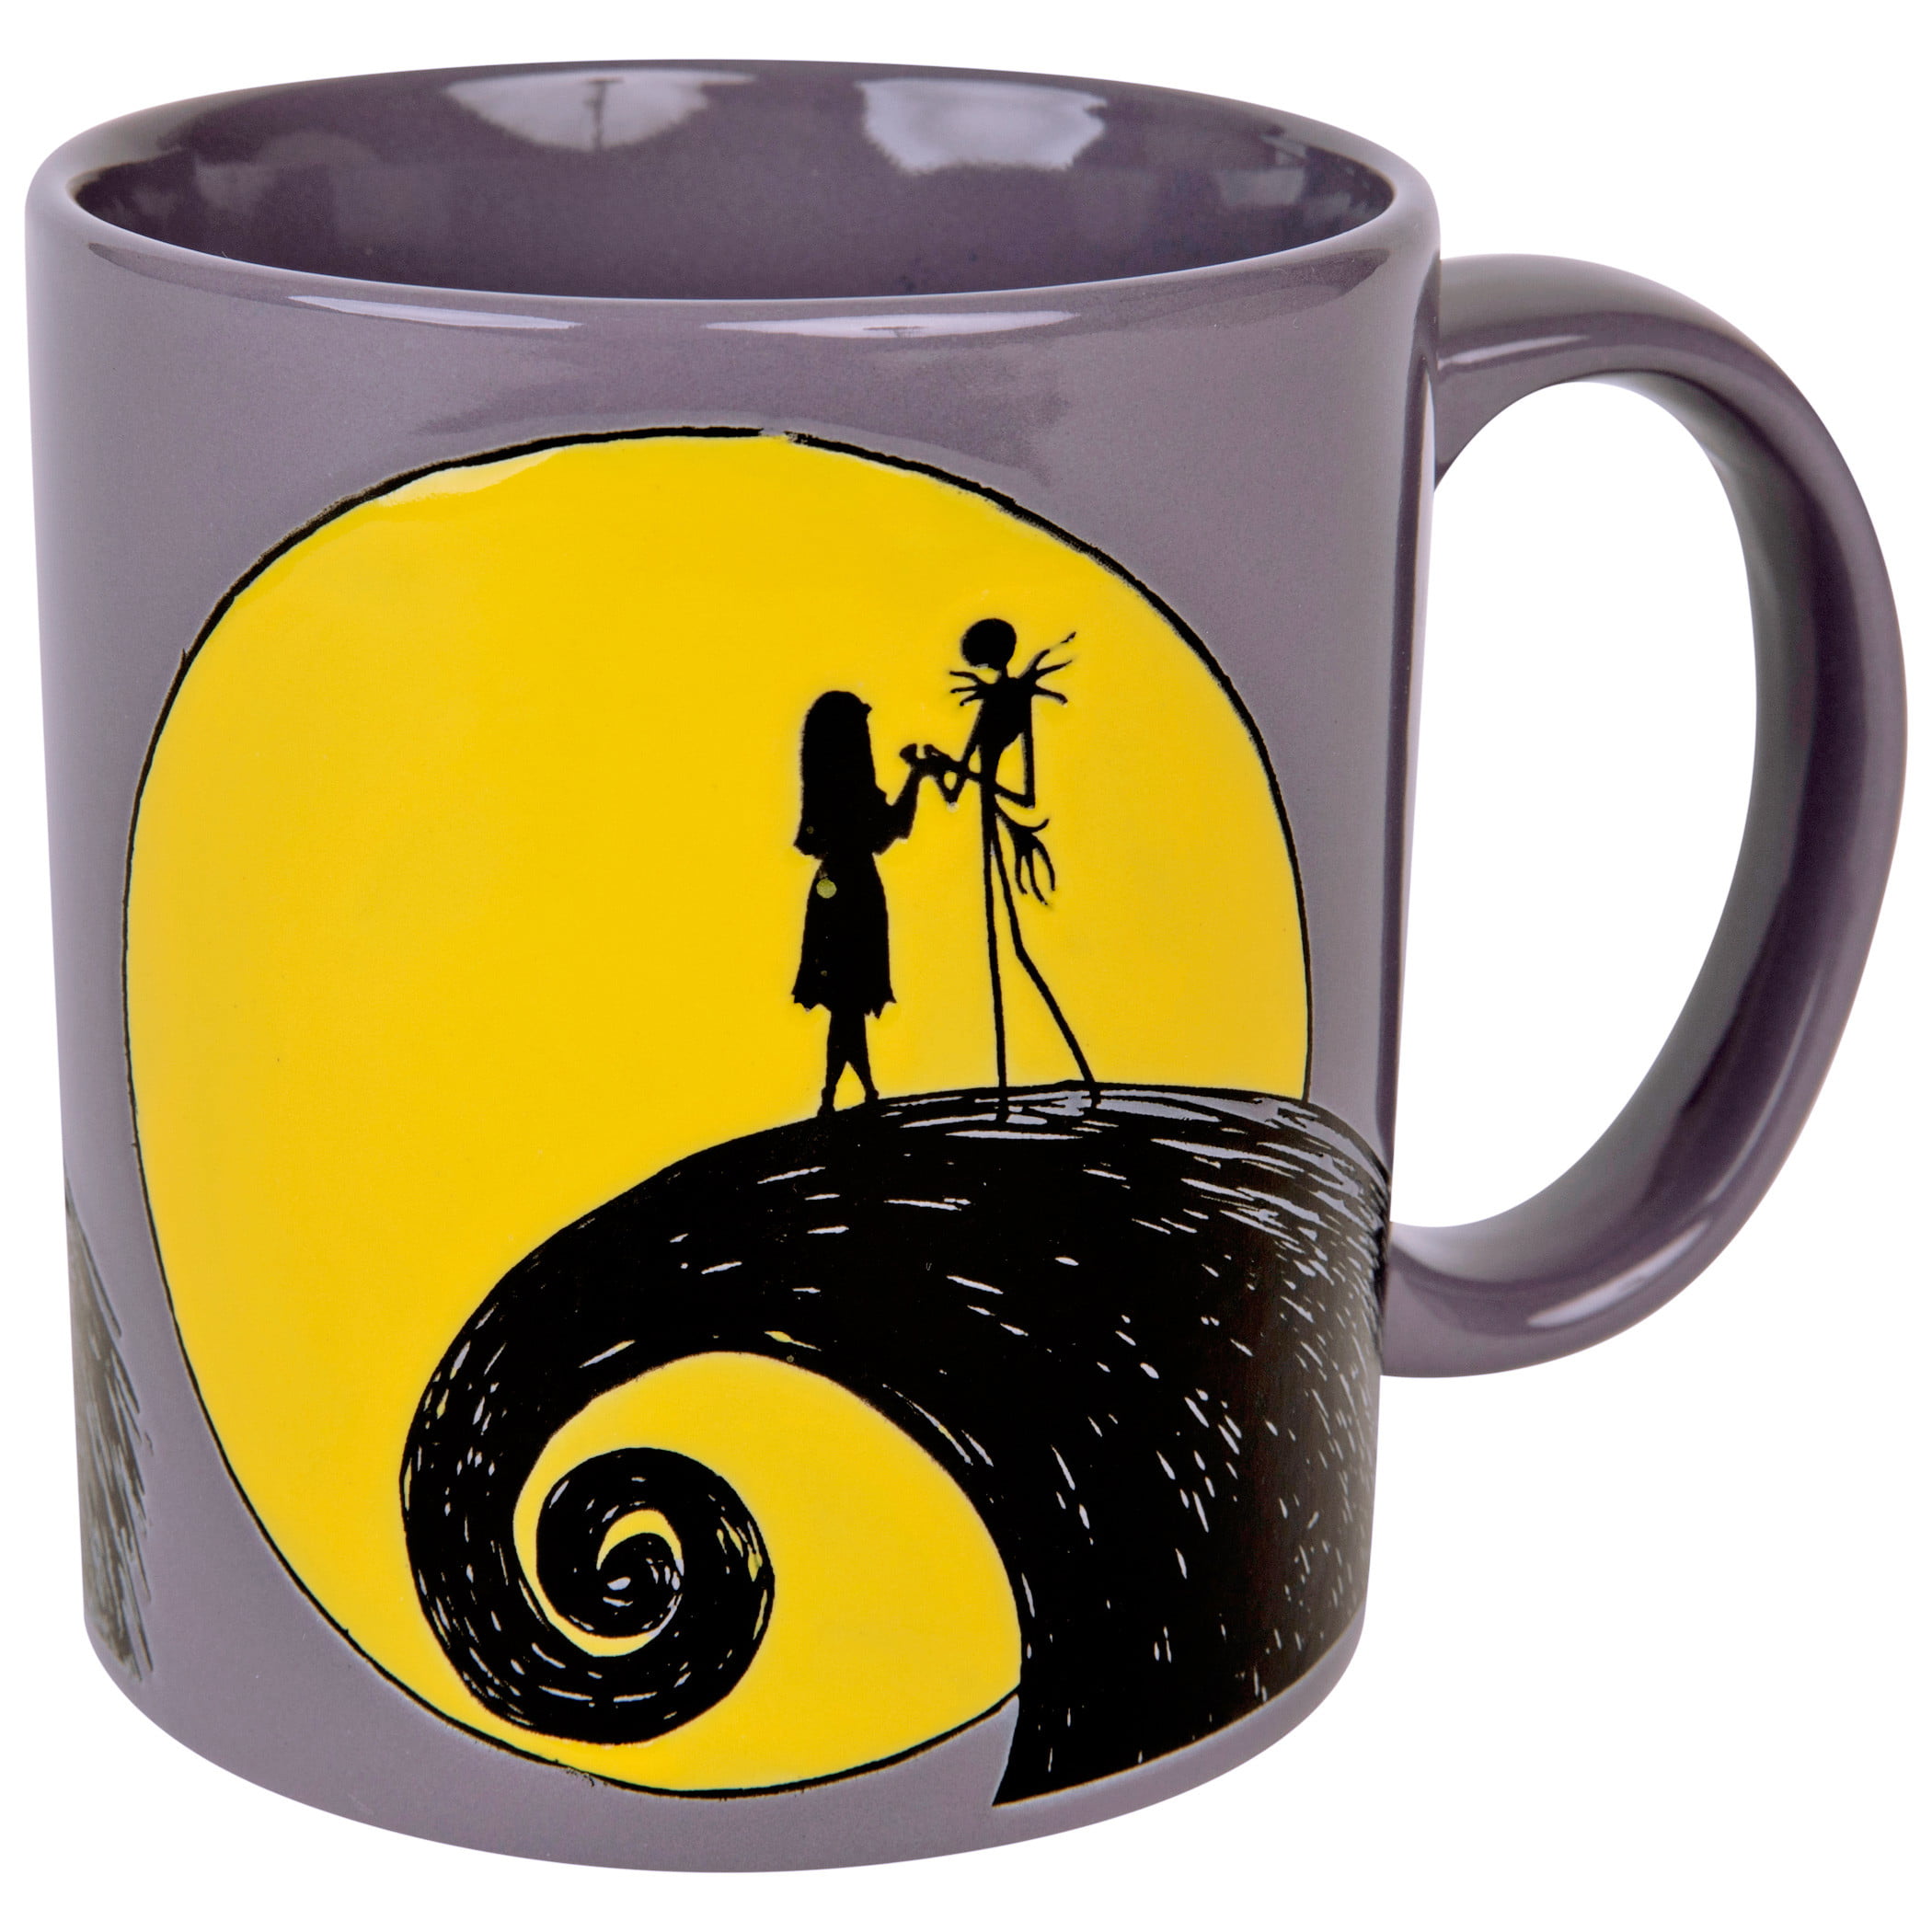 Disney Nightmare Before Christmas Hand Printed Mug Ideal Gift Novelty 